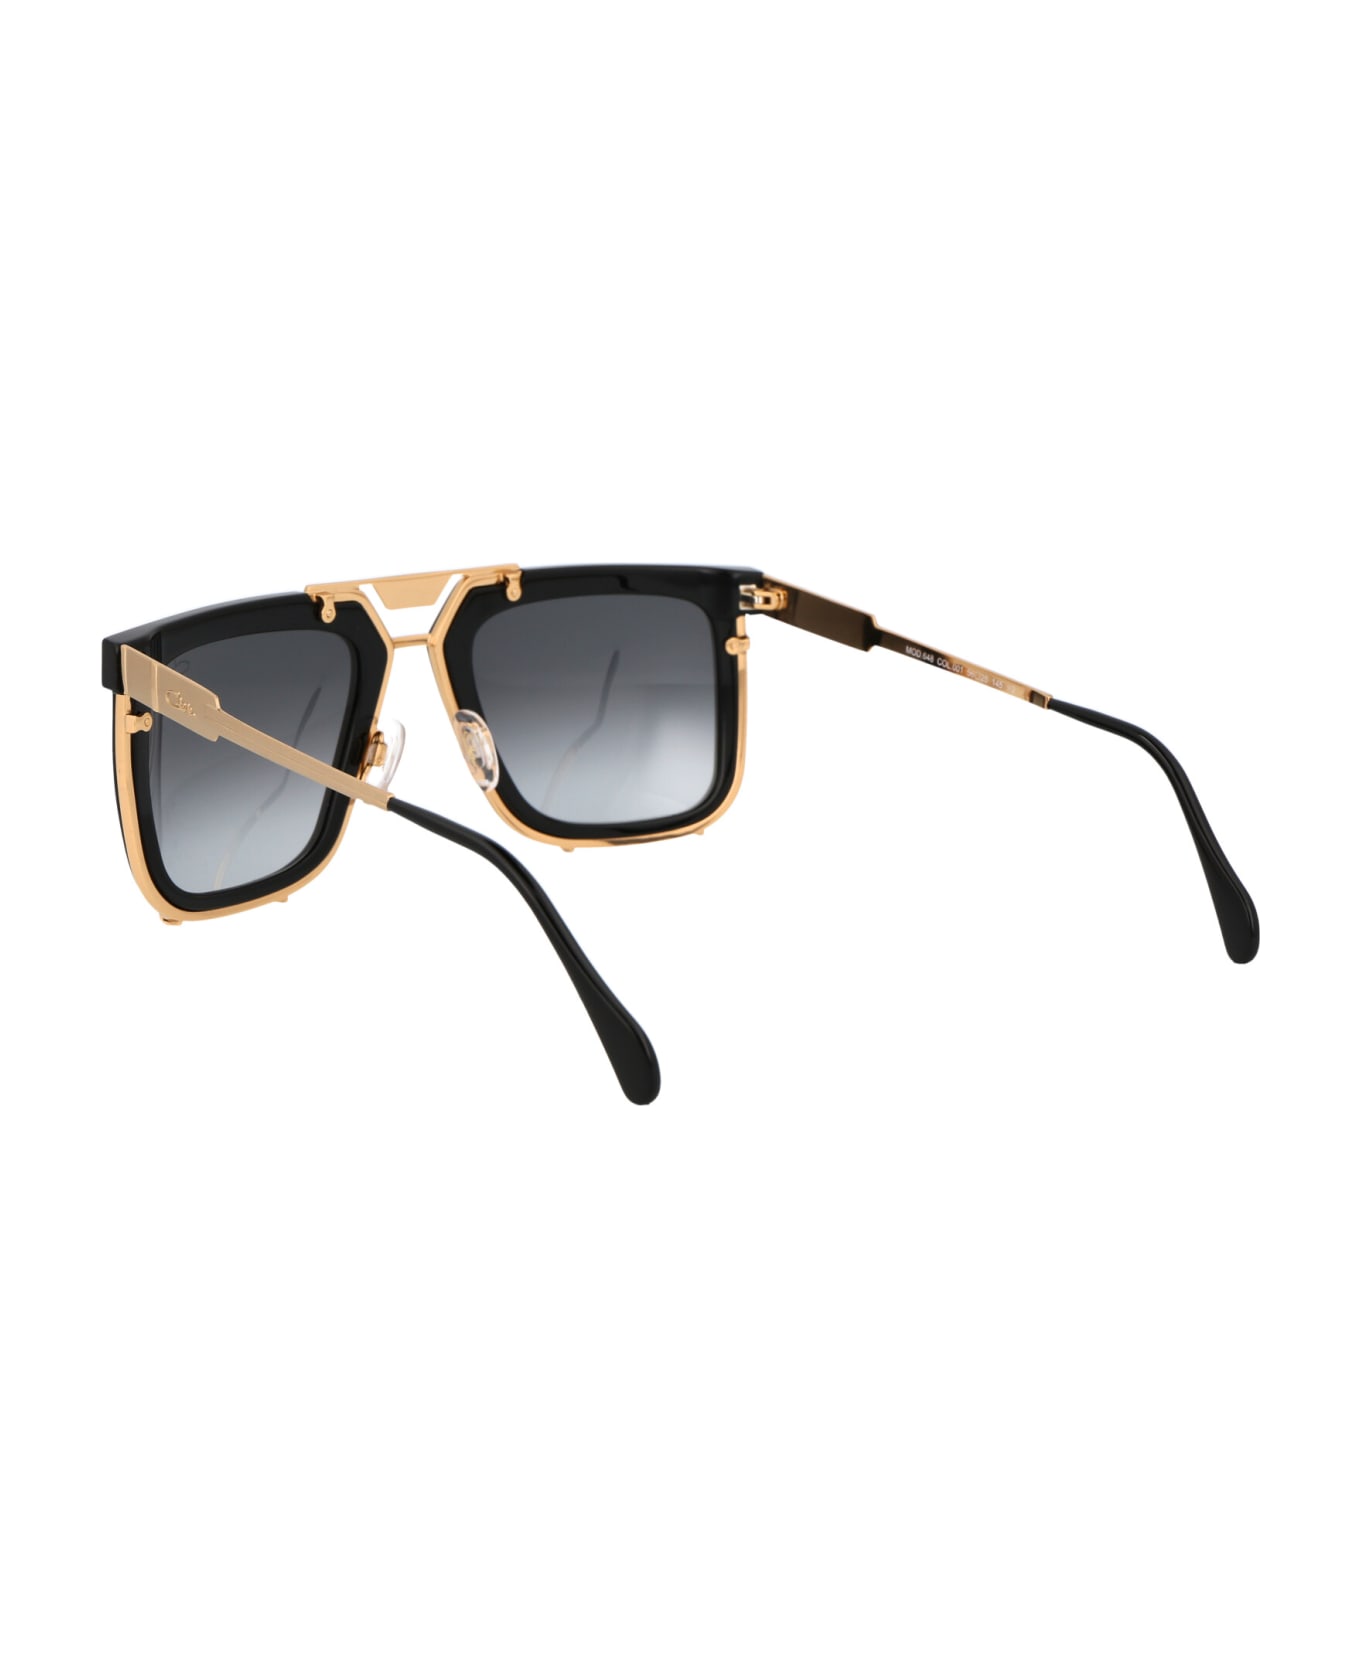 Cazal Mod. 648 Sunglasses - 001 GOLD BLACK